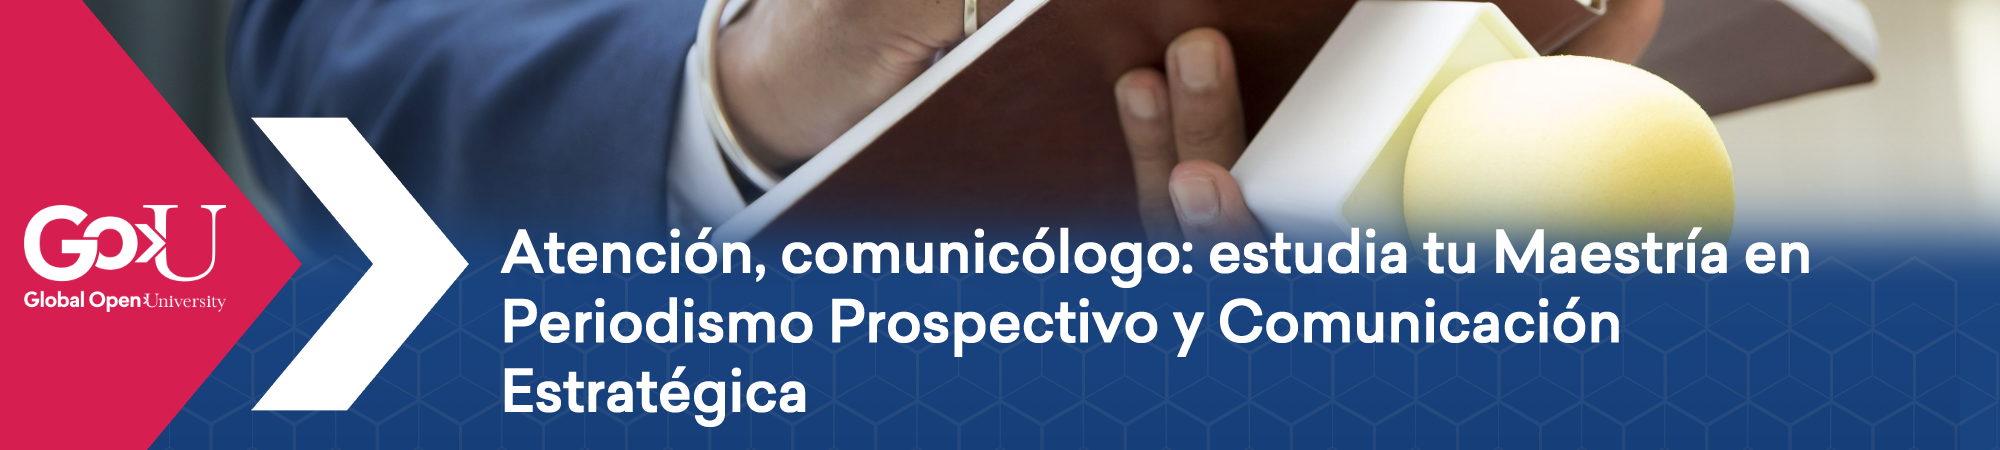 Atención, comunicólogo: estudia tu Maestría en Periodismo Prospectivo y Comunicación Estratégica